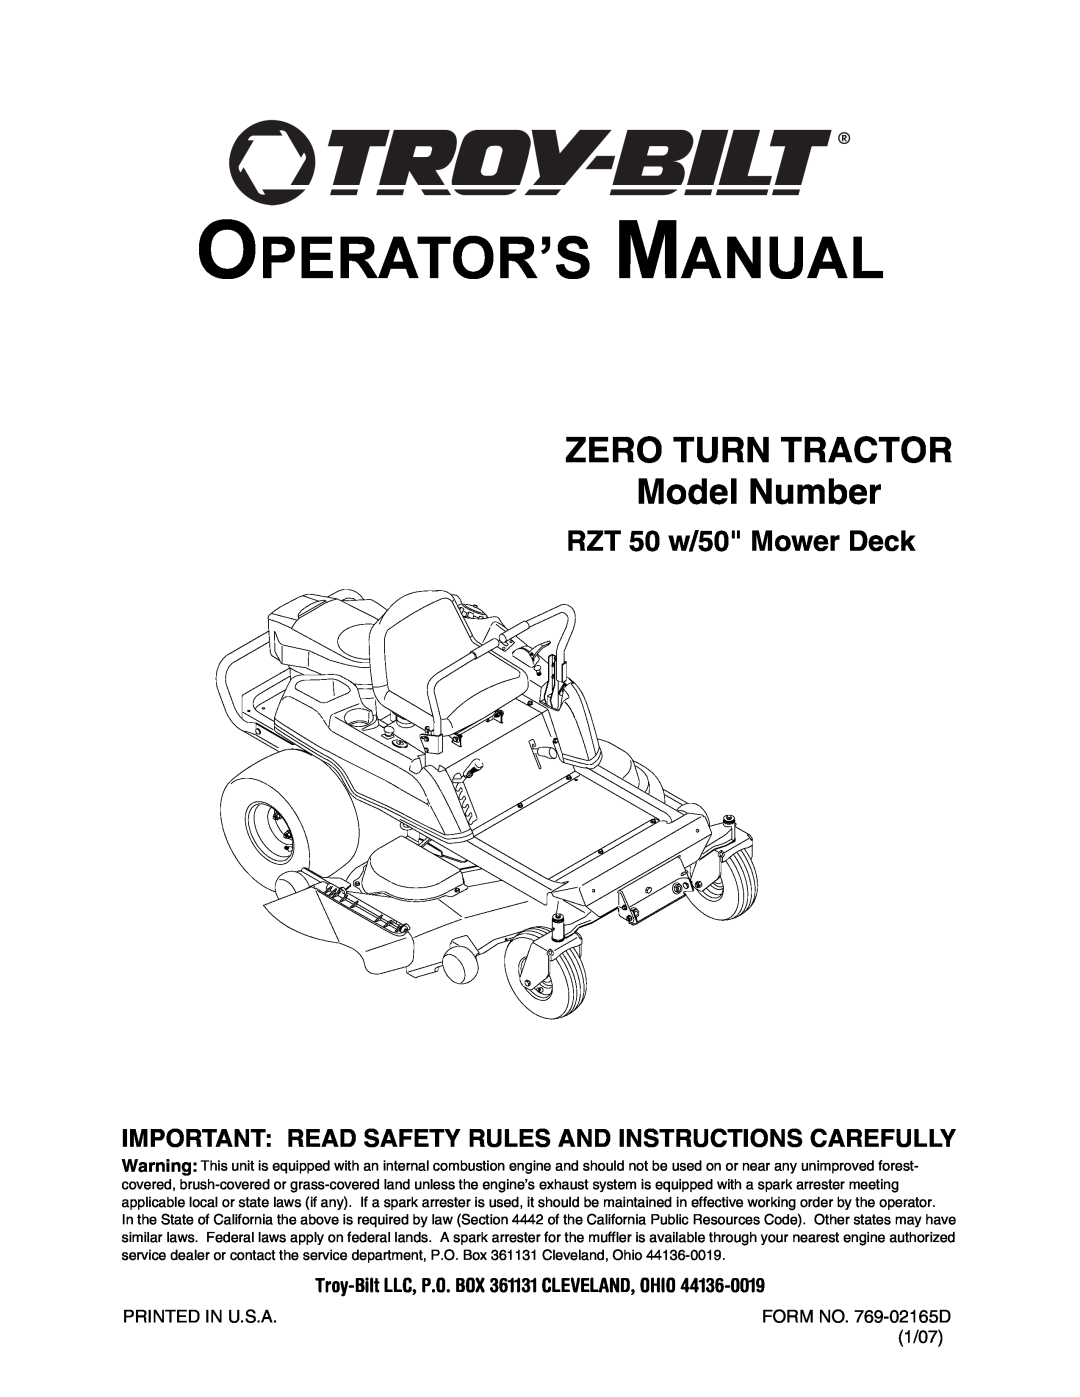 Troy-Bilt manual RZT 50 w/50 Mower Deck, Operator’S Manual, ZERO TURN TRACTOR Model Number 